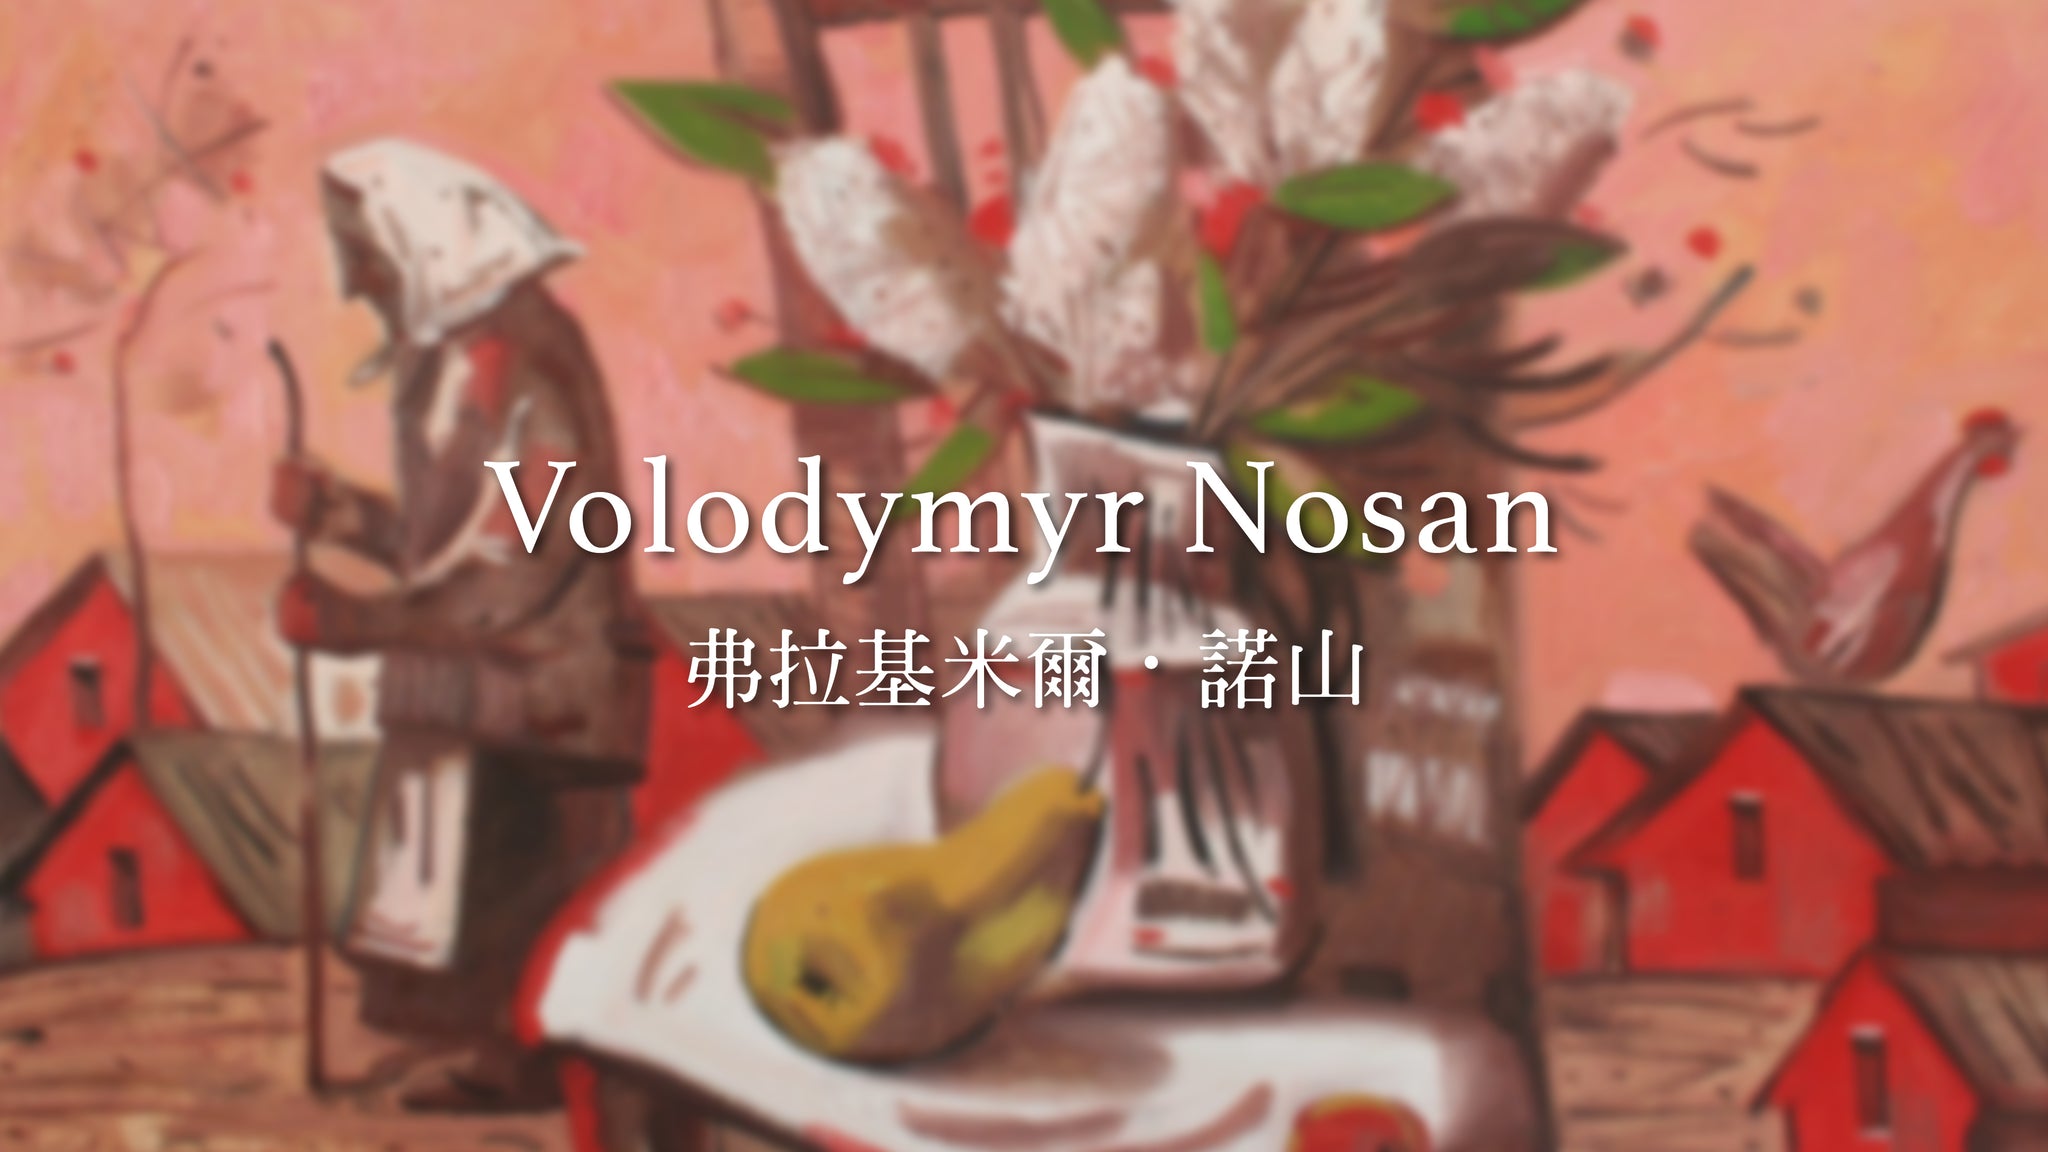 諾山 Rosan | 真 : 諾山的繪畫 | Volodymyr Nosan Solo Exhibition